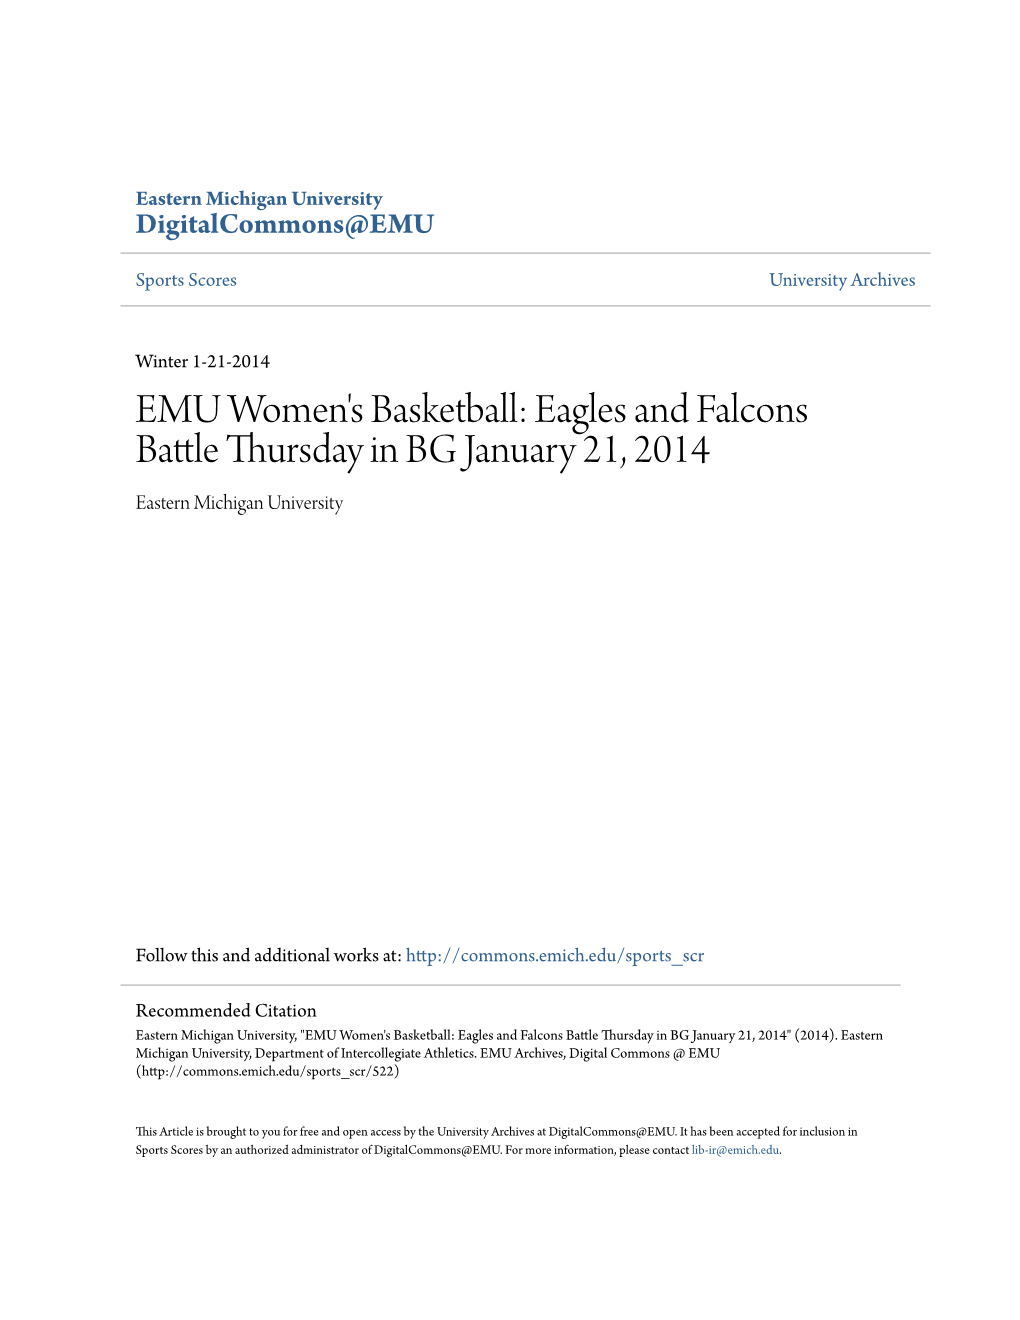 EMU Women's Basketball: Eagles and Falcons Battle Ursdth Ay in BG January 21, 2014 Eastern Michigan University